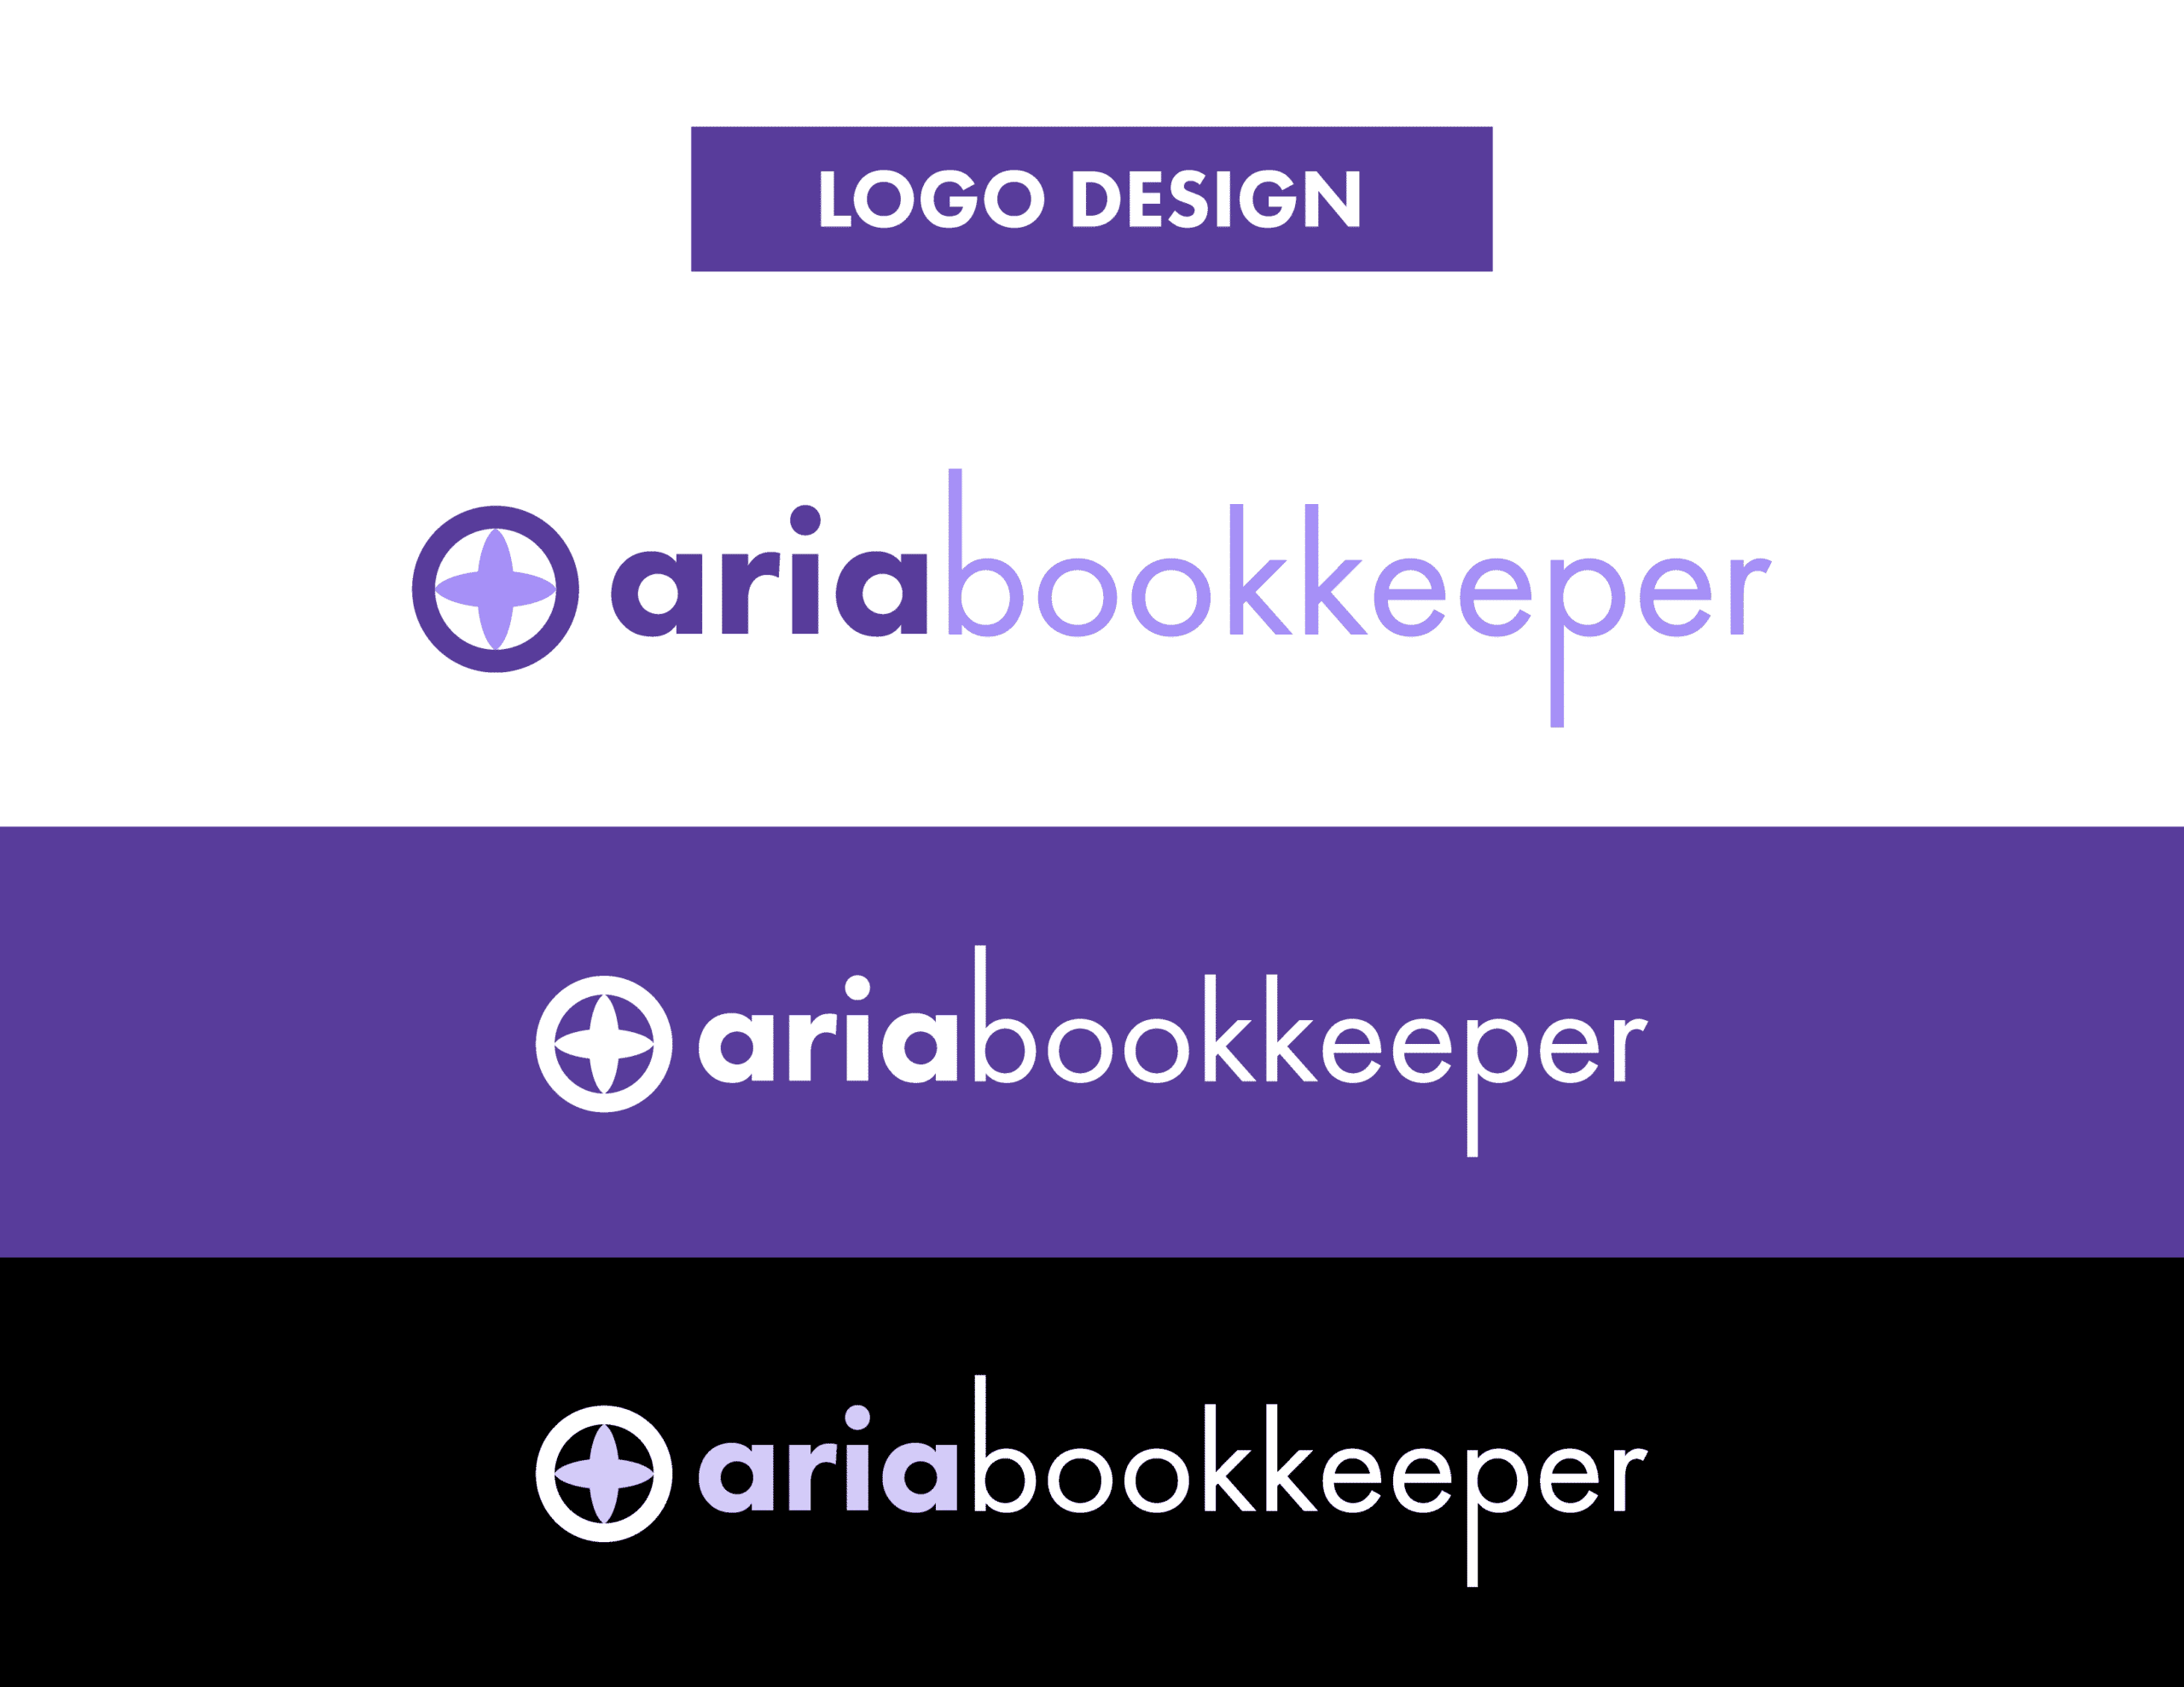 01Aria_Showcase_Logo Design